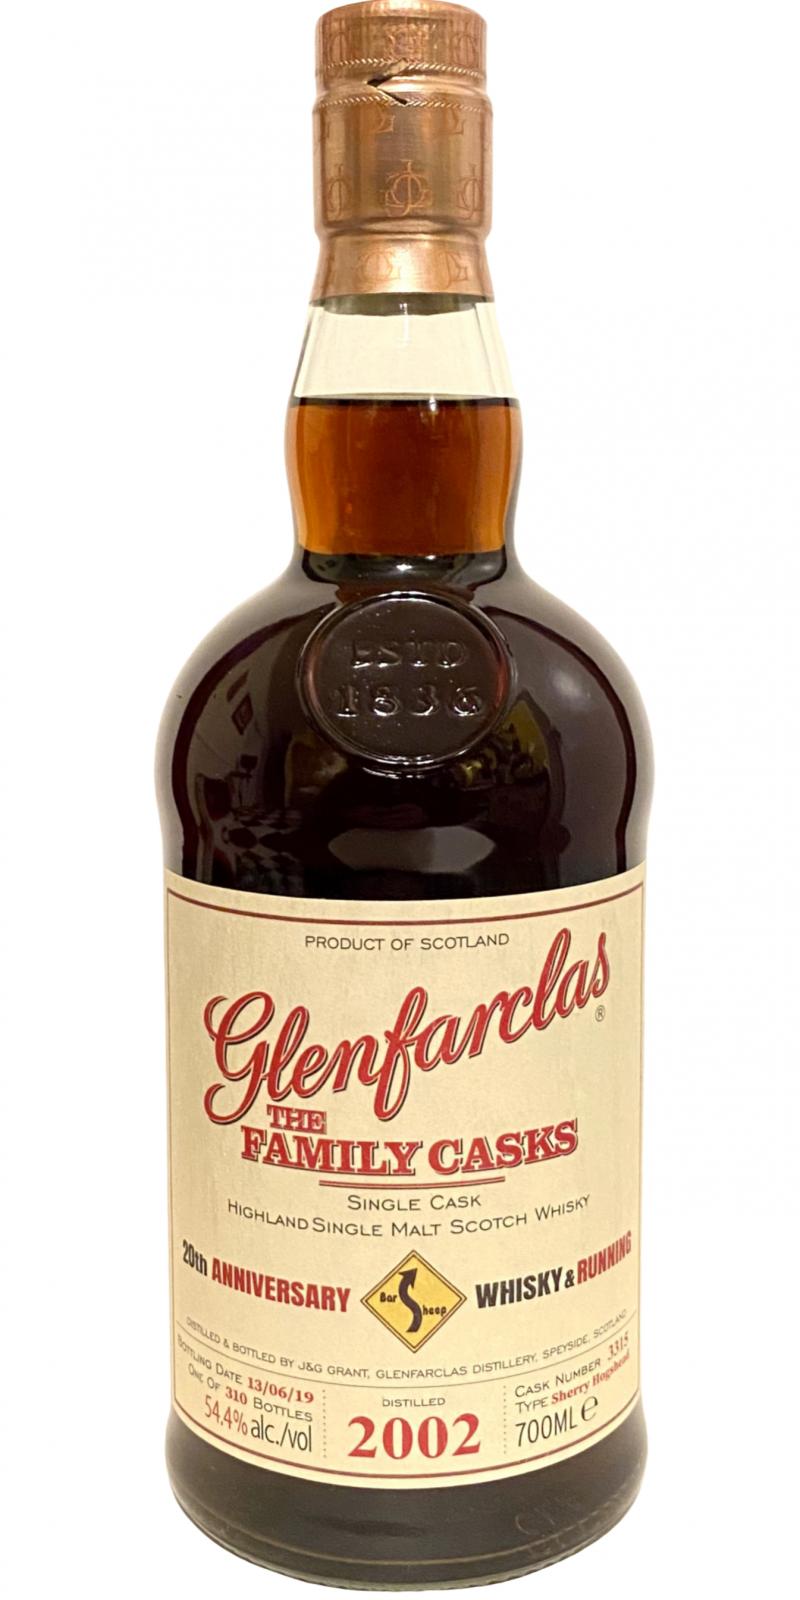 Glenfarclas 2002 The Family Casks Sherry Hogshead #3315 54.4% 700ml